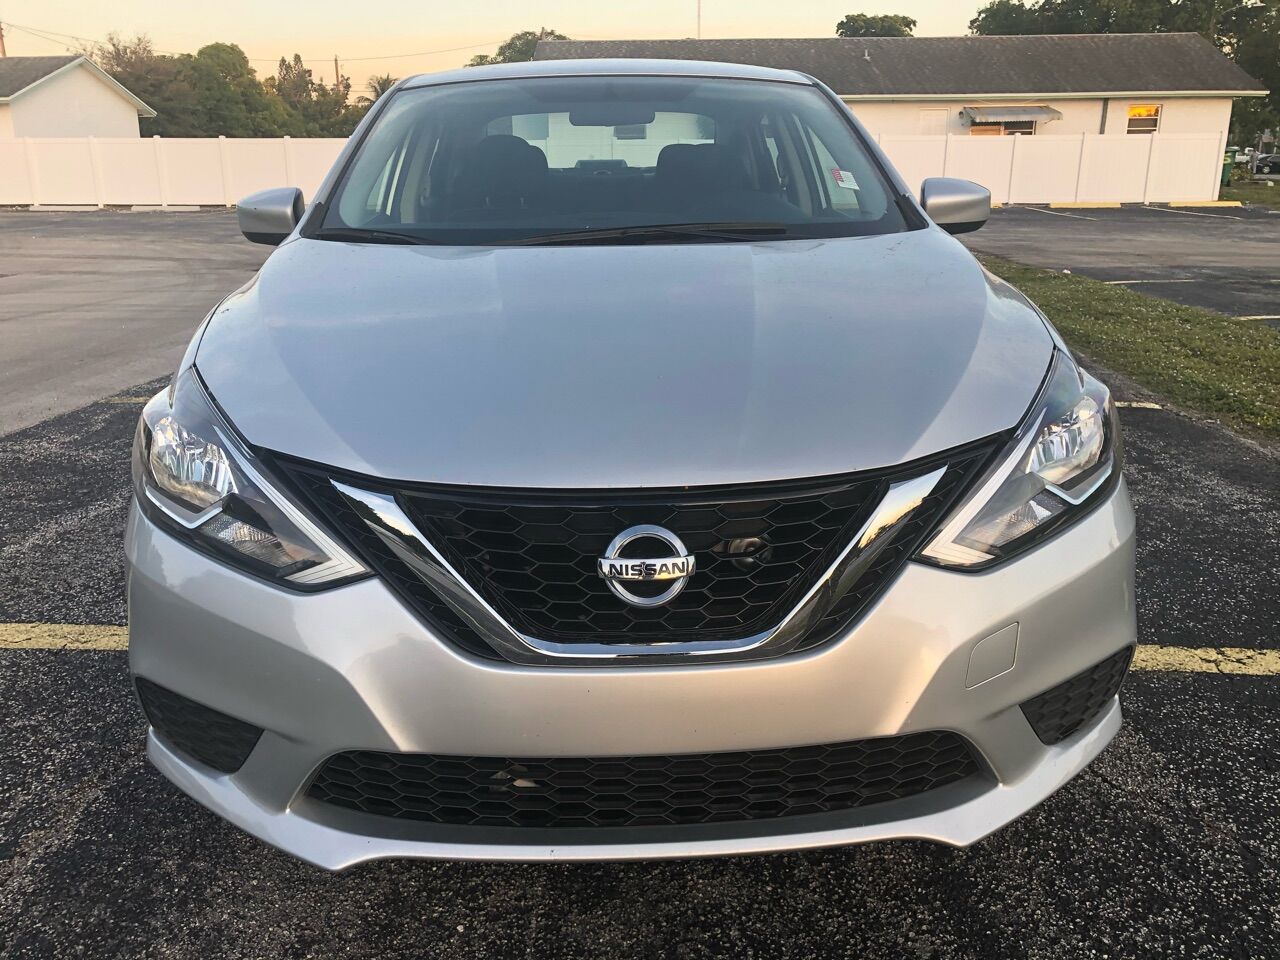 2019 Nissan Sentra Sedan - $12,450